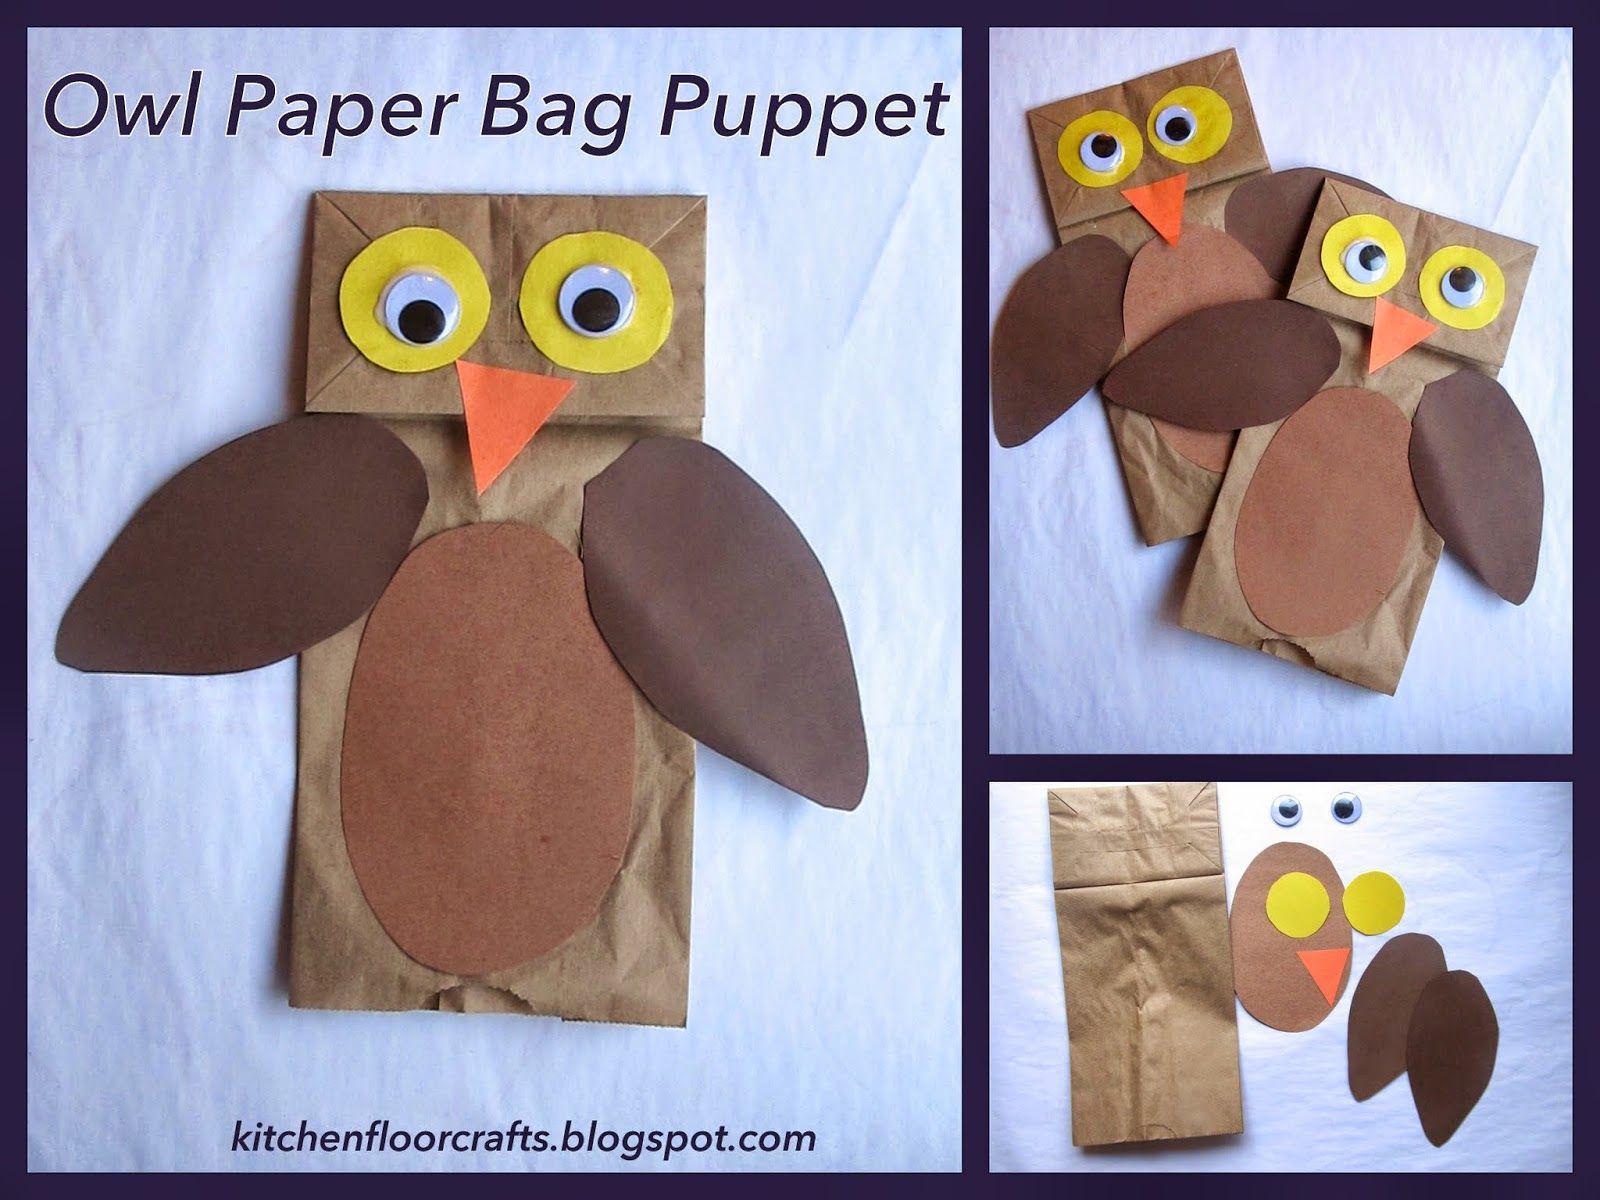 Kitchen Floor Crafts: Owl Paper Bag Puppets -   24 owl crafts kindergarten
 ideas